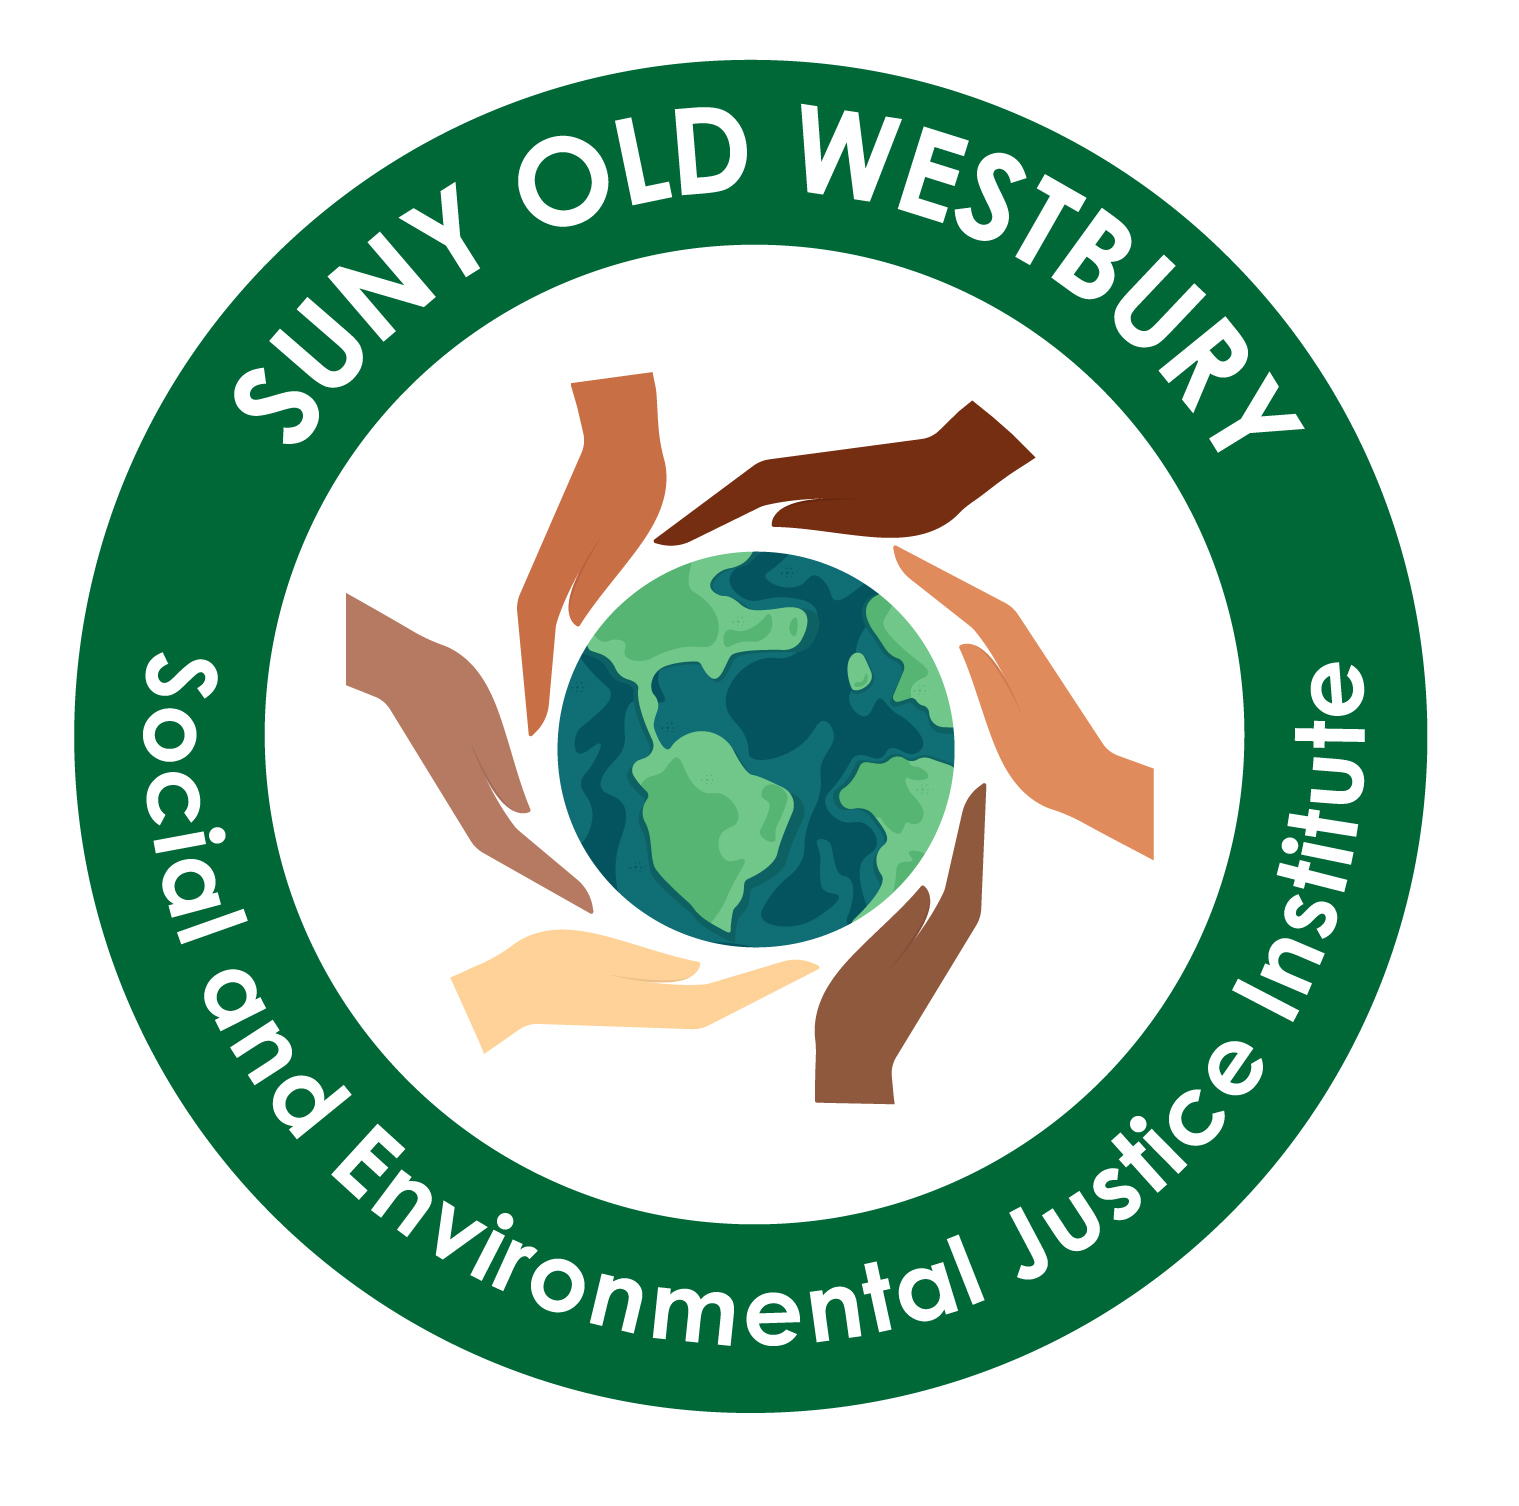 SUNY Old Westbury Social & Environmental Justice Institute logo